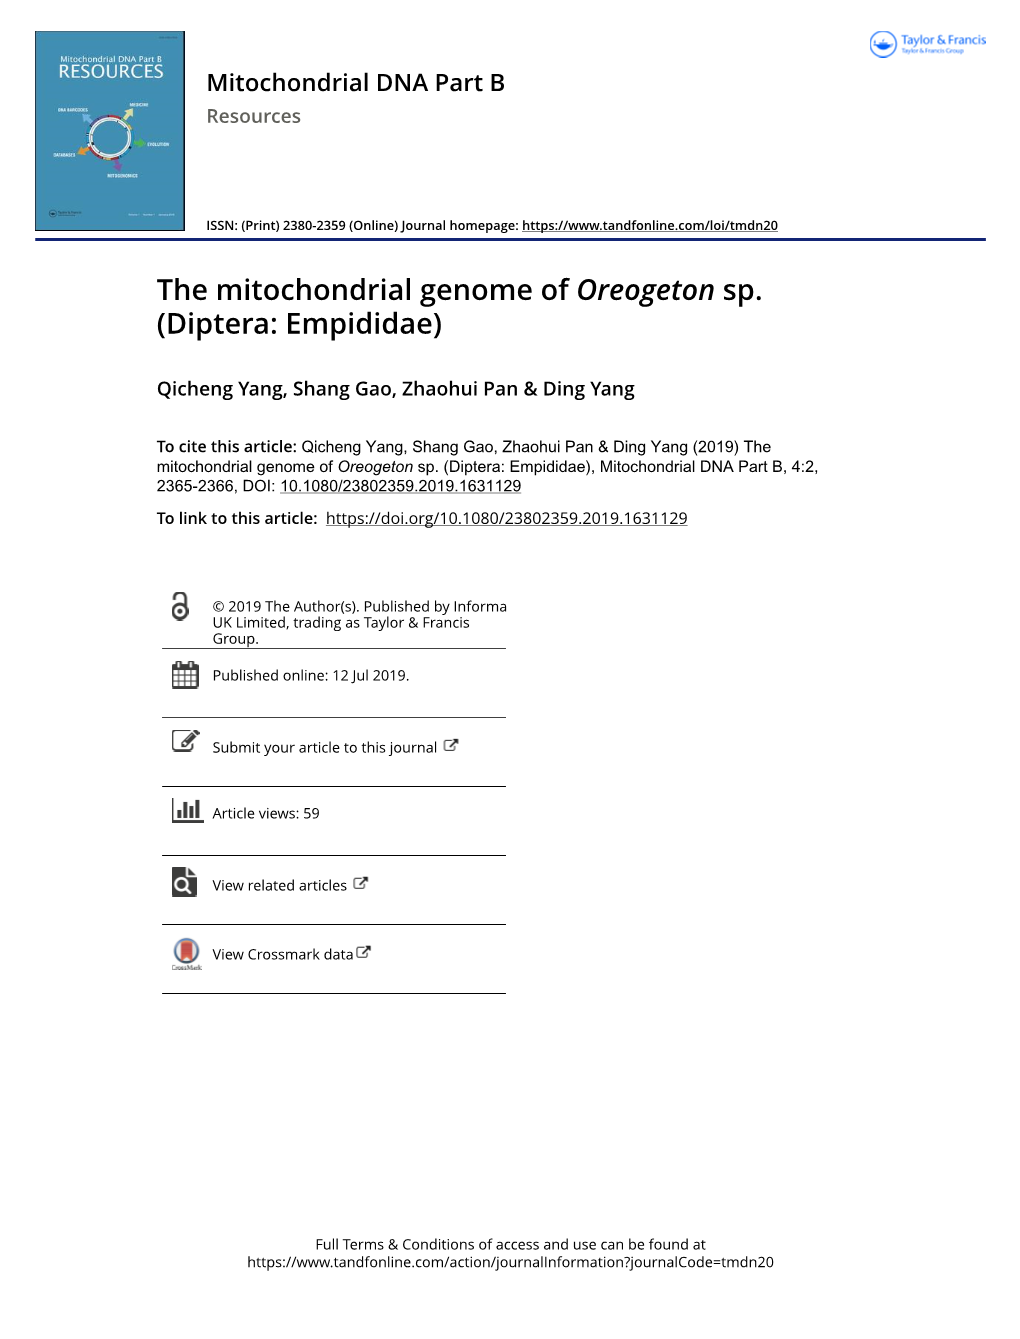 The Mitochondrial Genome of Oreogeton Sp. (Diptera: Empididae)